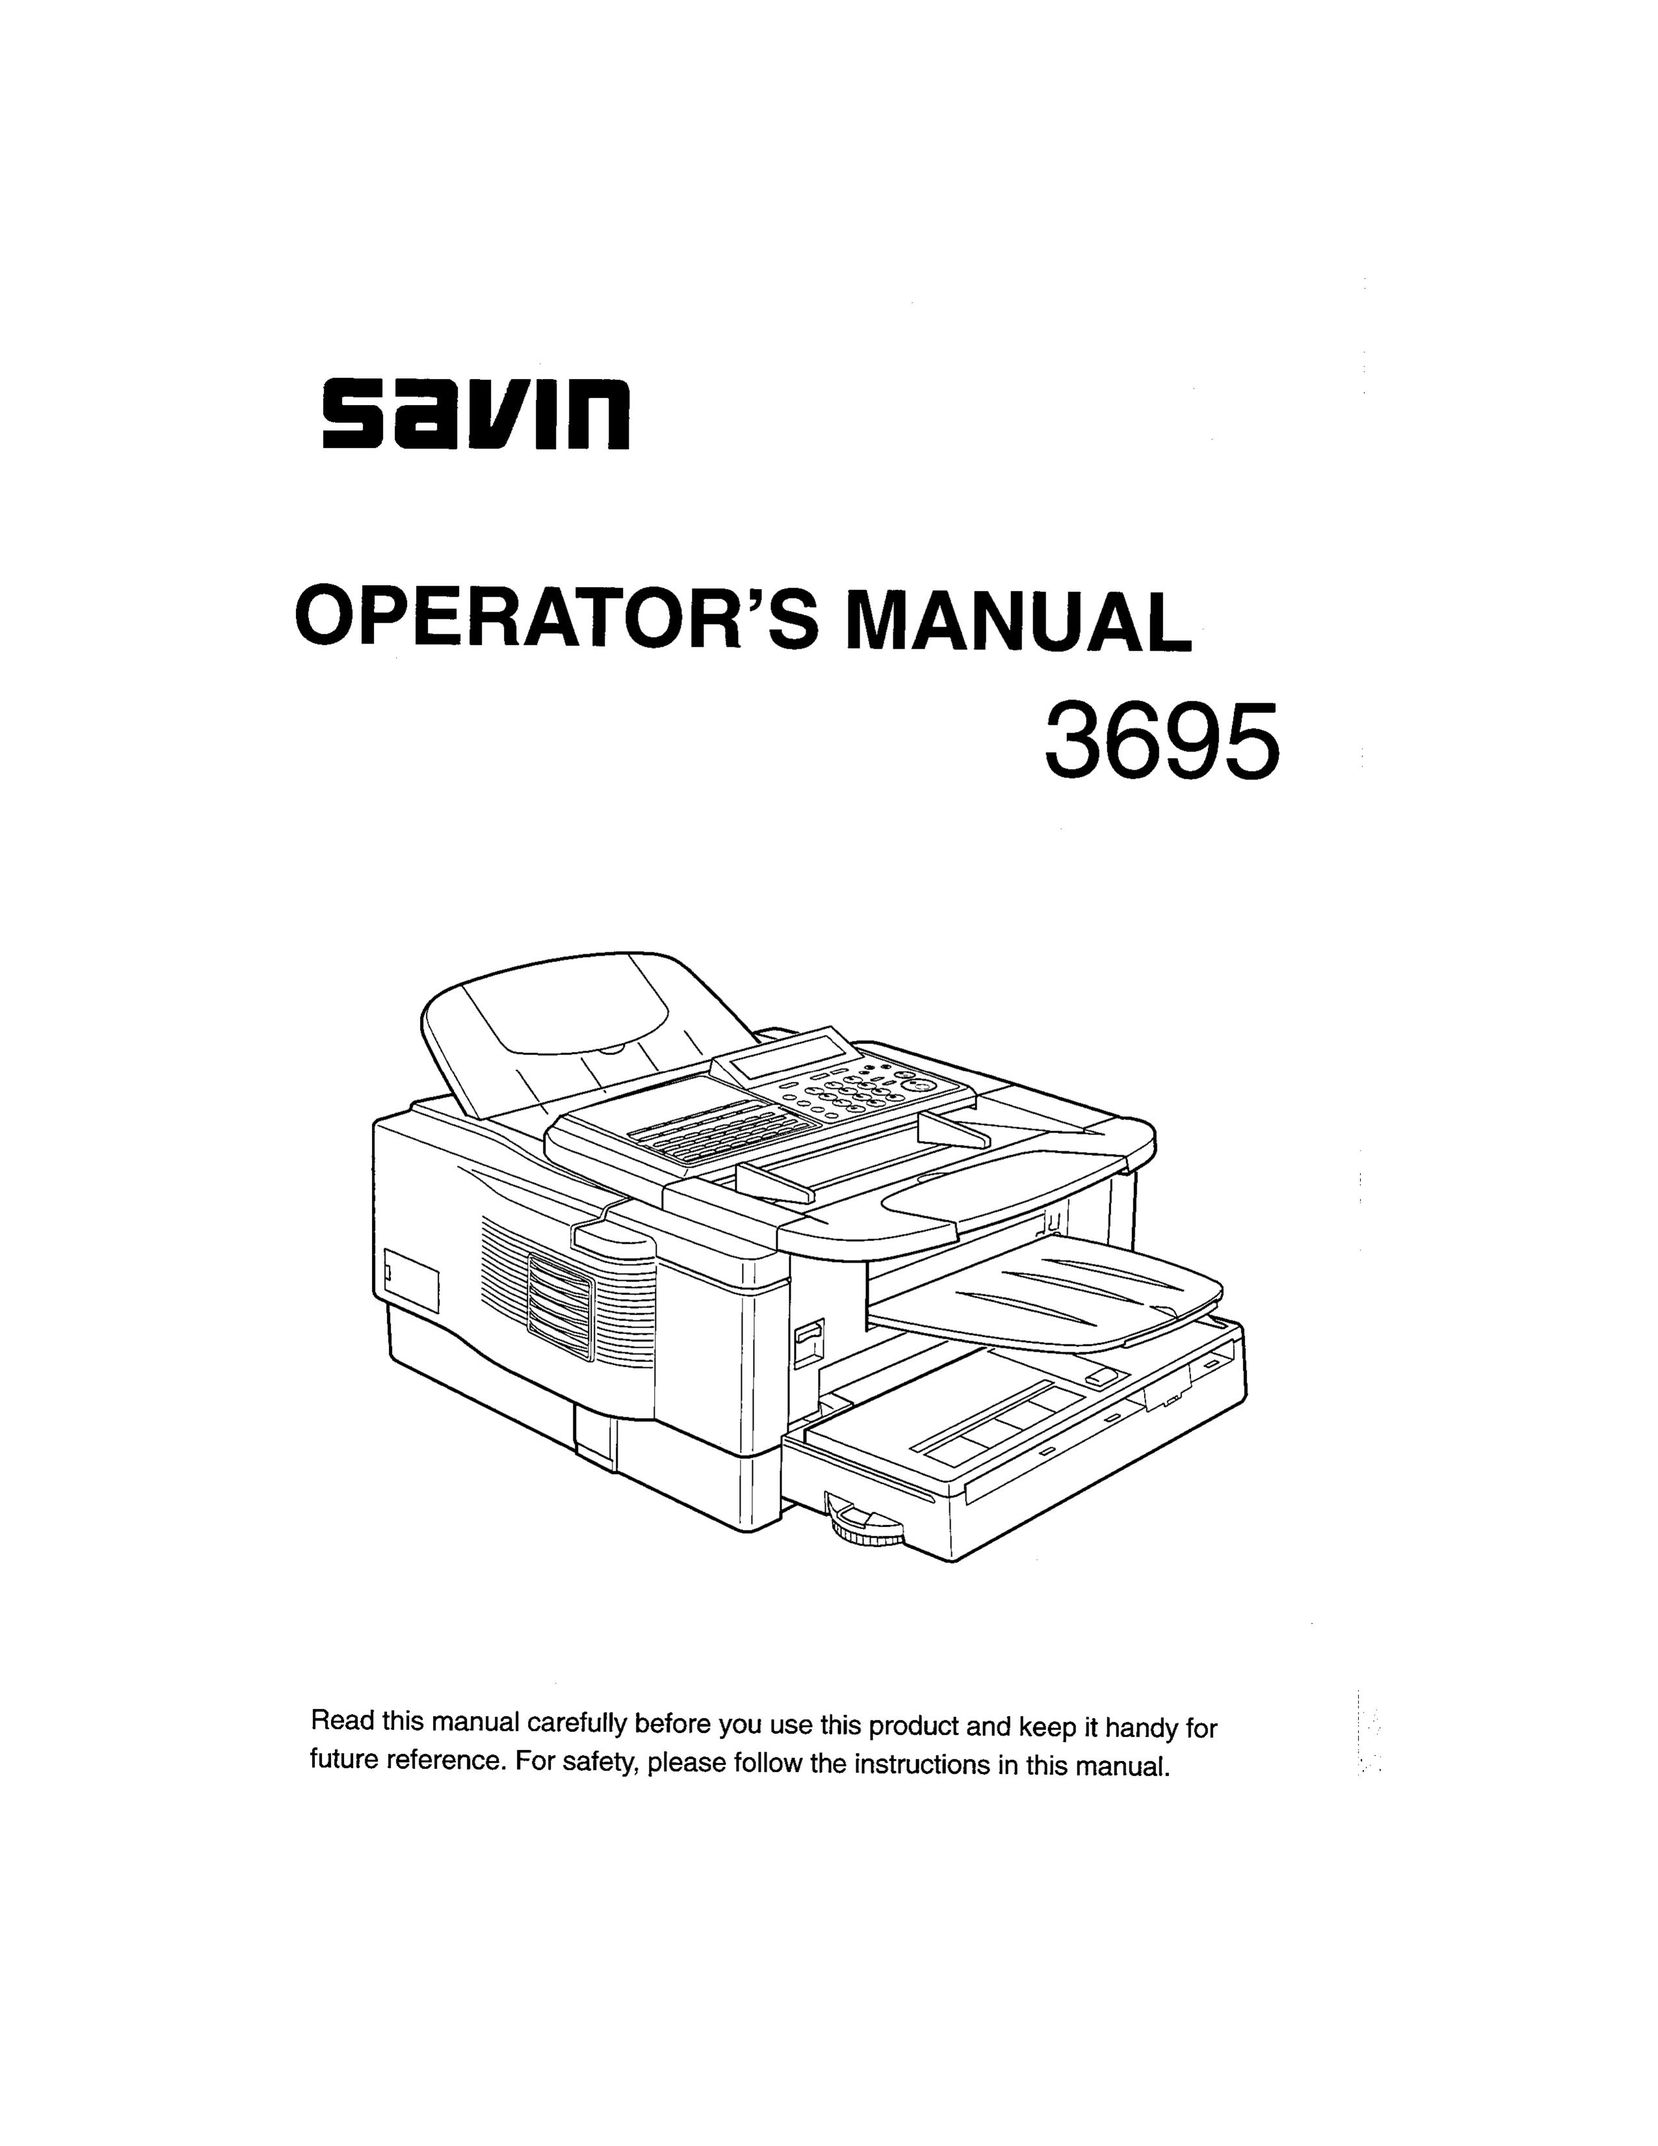 Savin 3695 All in One Printer User Manual